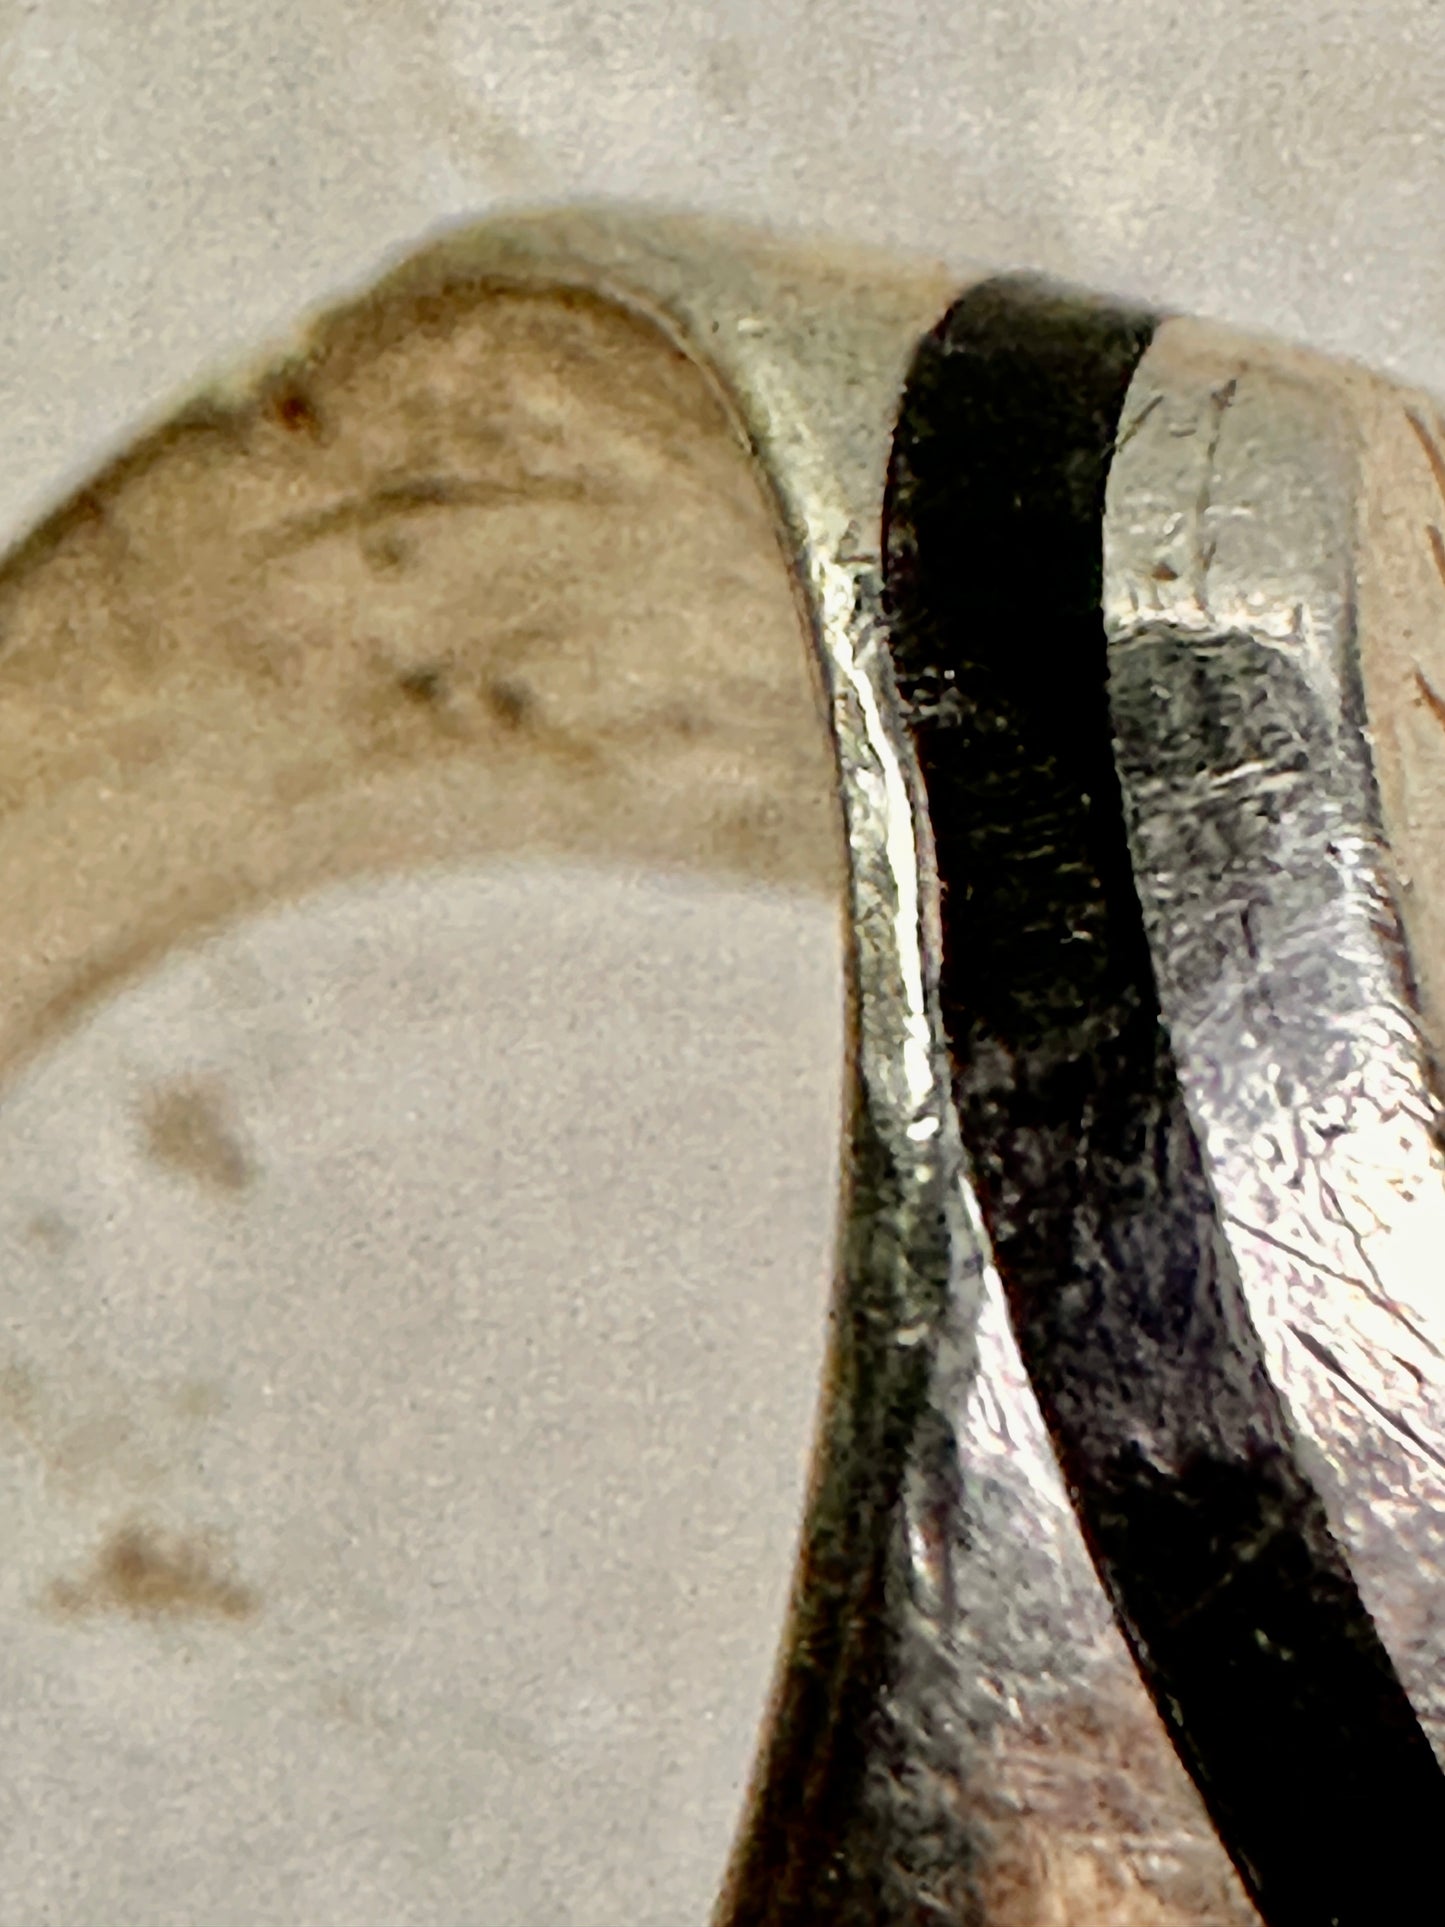 Navajo Eagle ring size 9.50 sterling silver women men